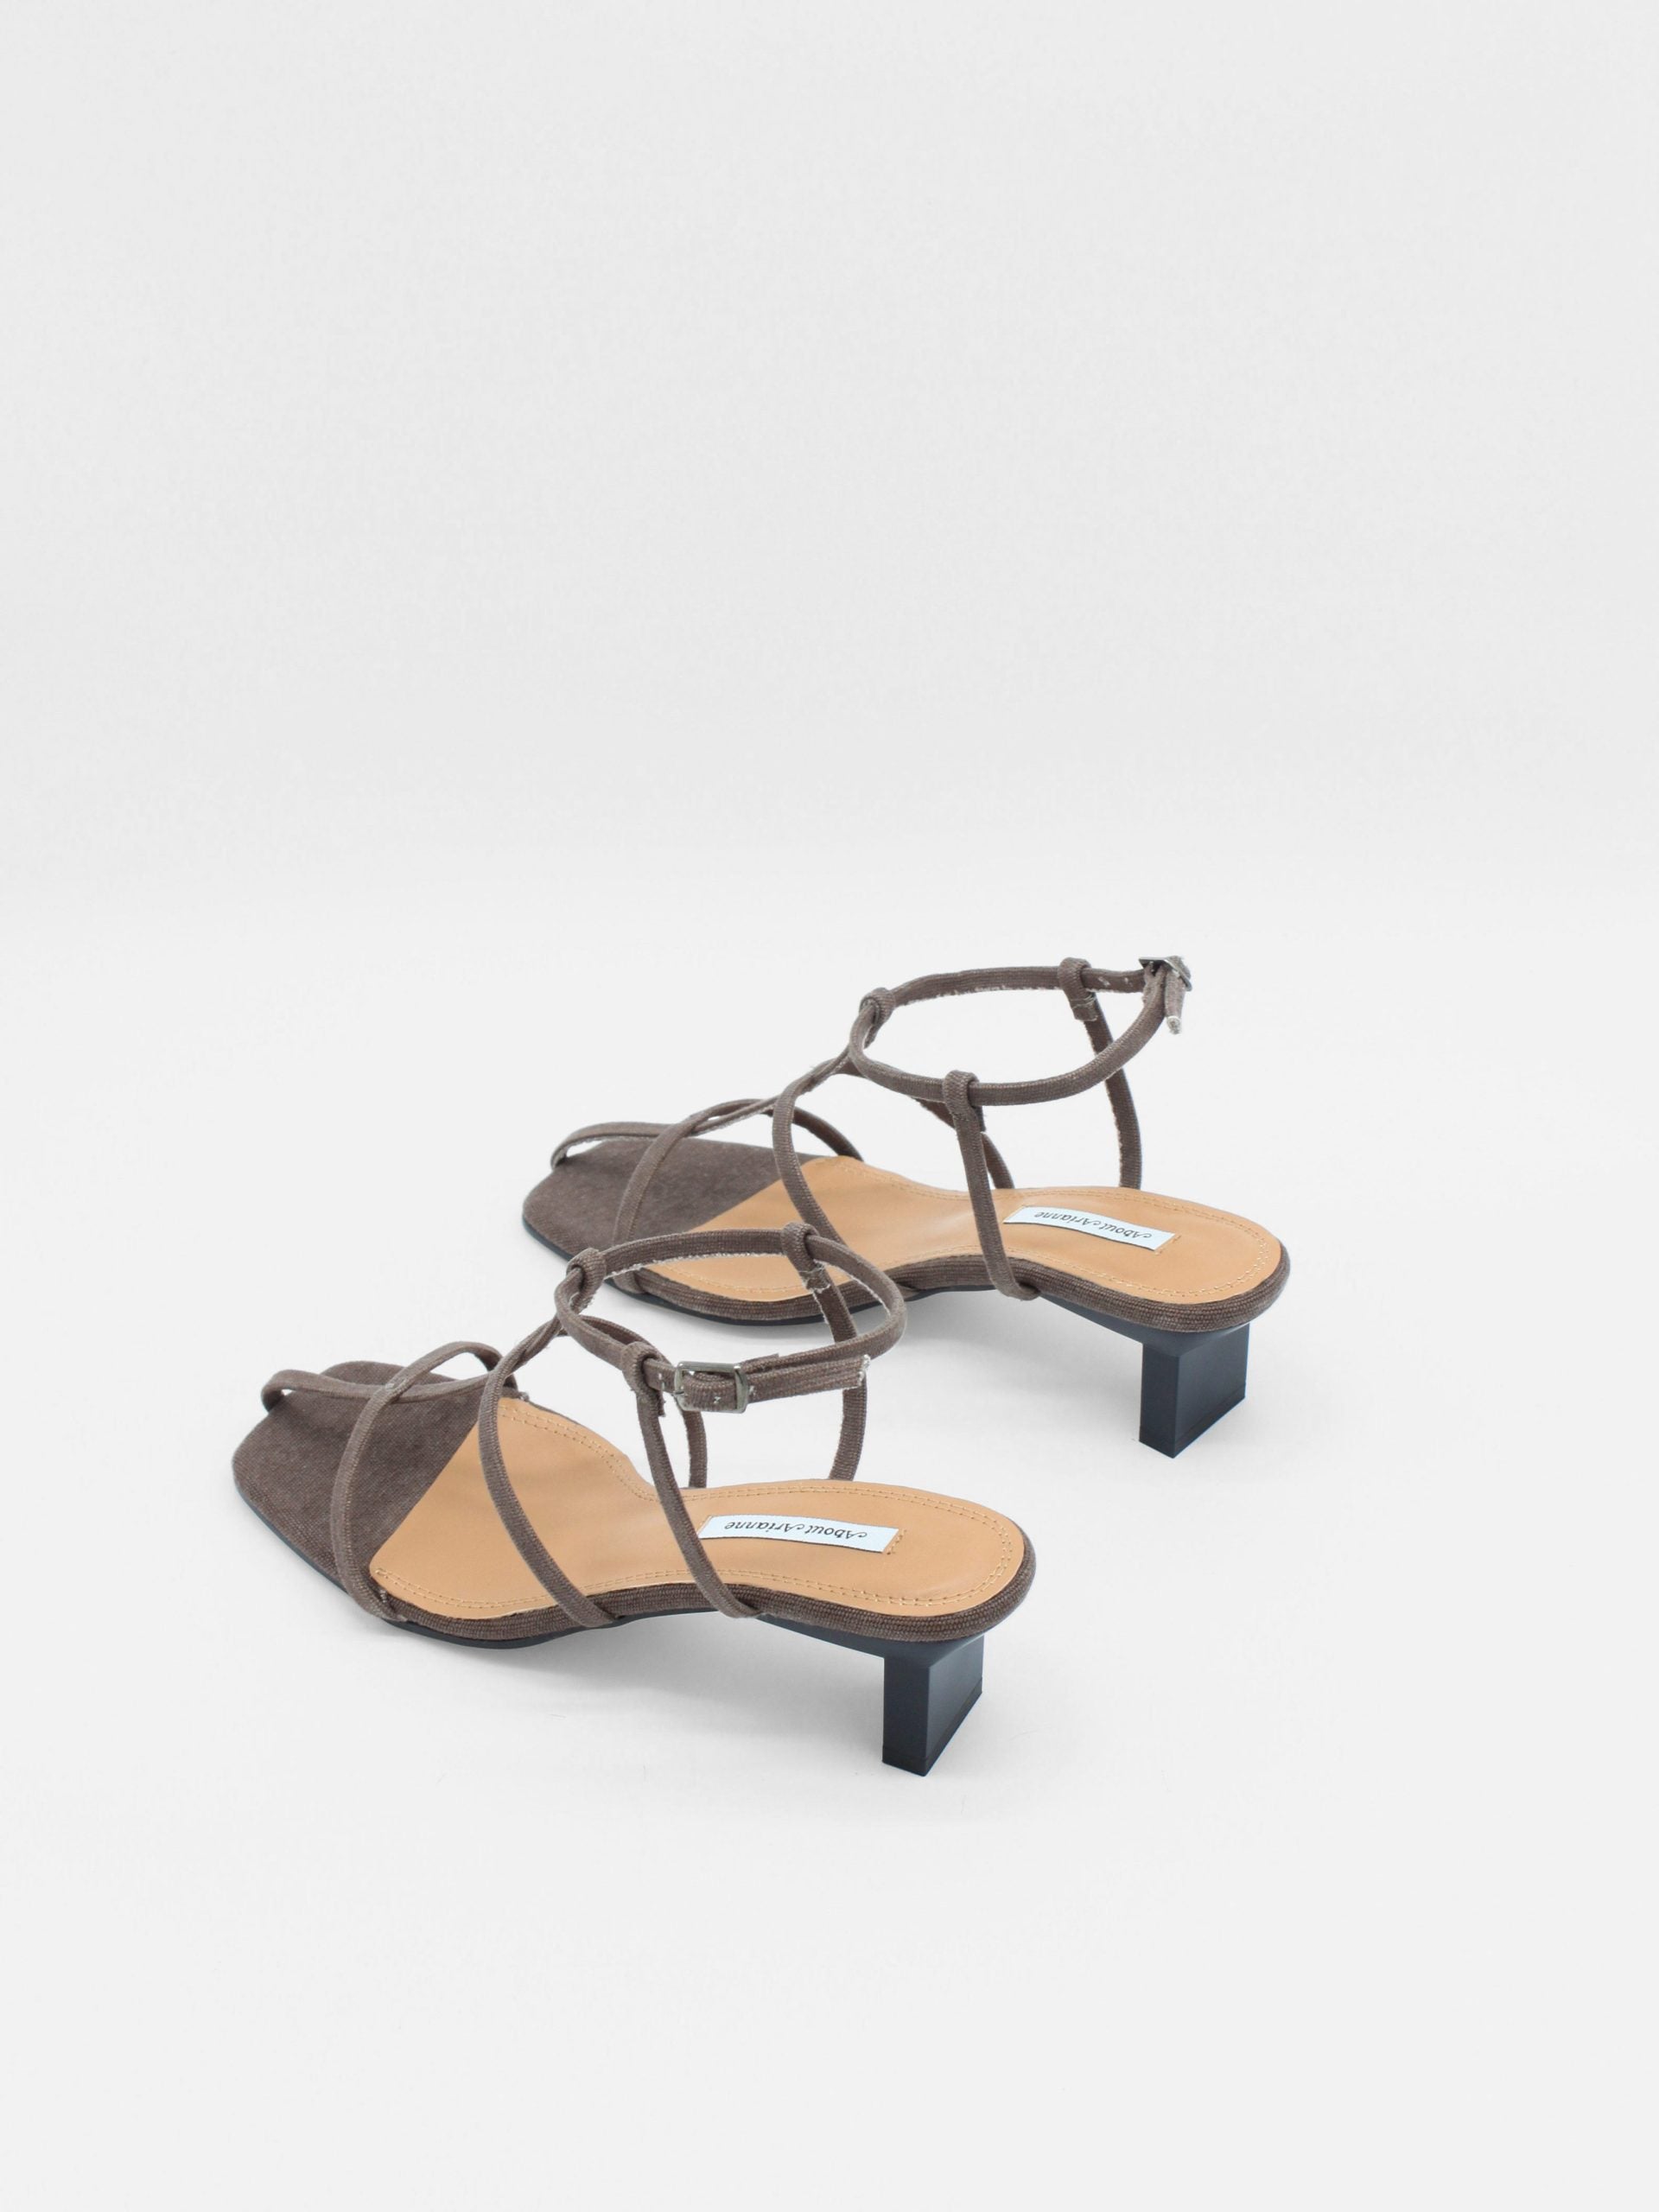 Roan By Bed Stu Xandria Bosco Gray Women's Thong Sandals Leather Size 6 M |  eBay